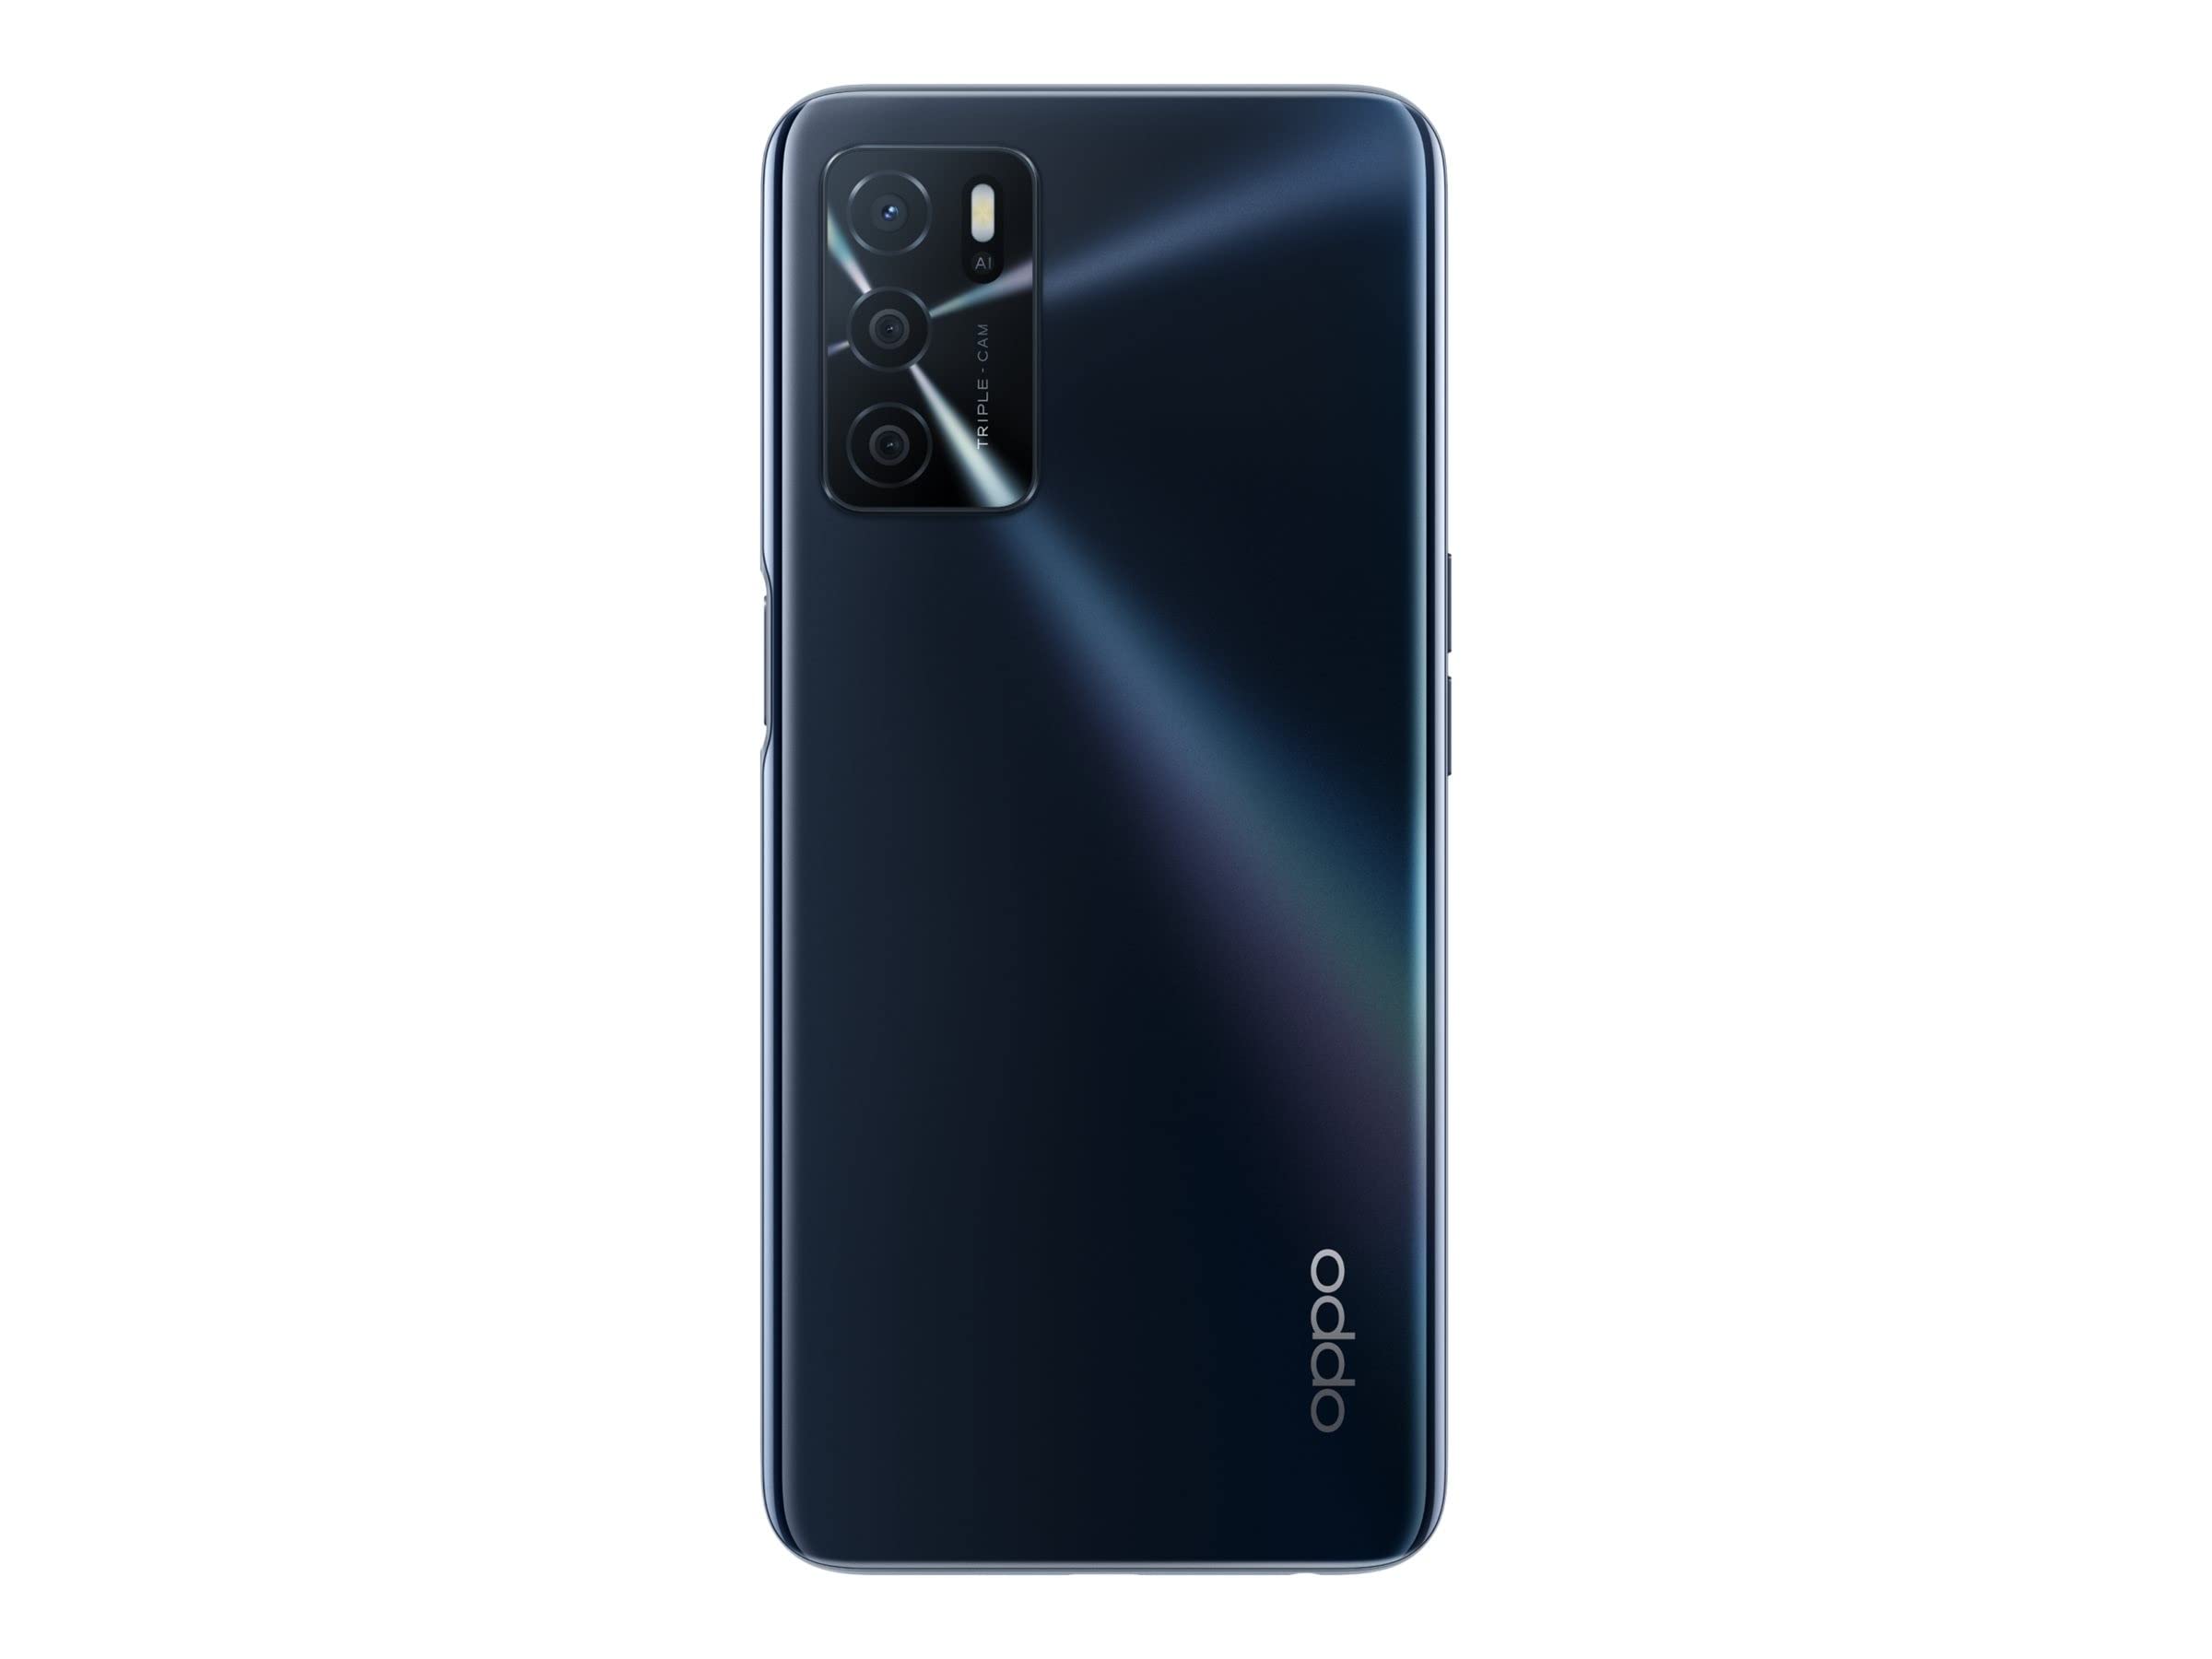 OPPO A54s Dual-SIM 128GB ROM + 4GB RAM (GSM only | No CDMA) Factory Unlocked 4G/LTE Smartphone (Crystal Black) - International Version